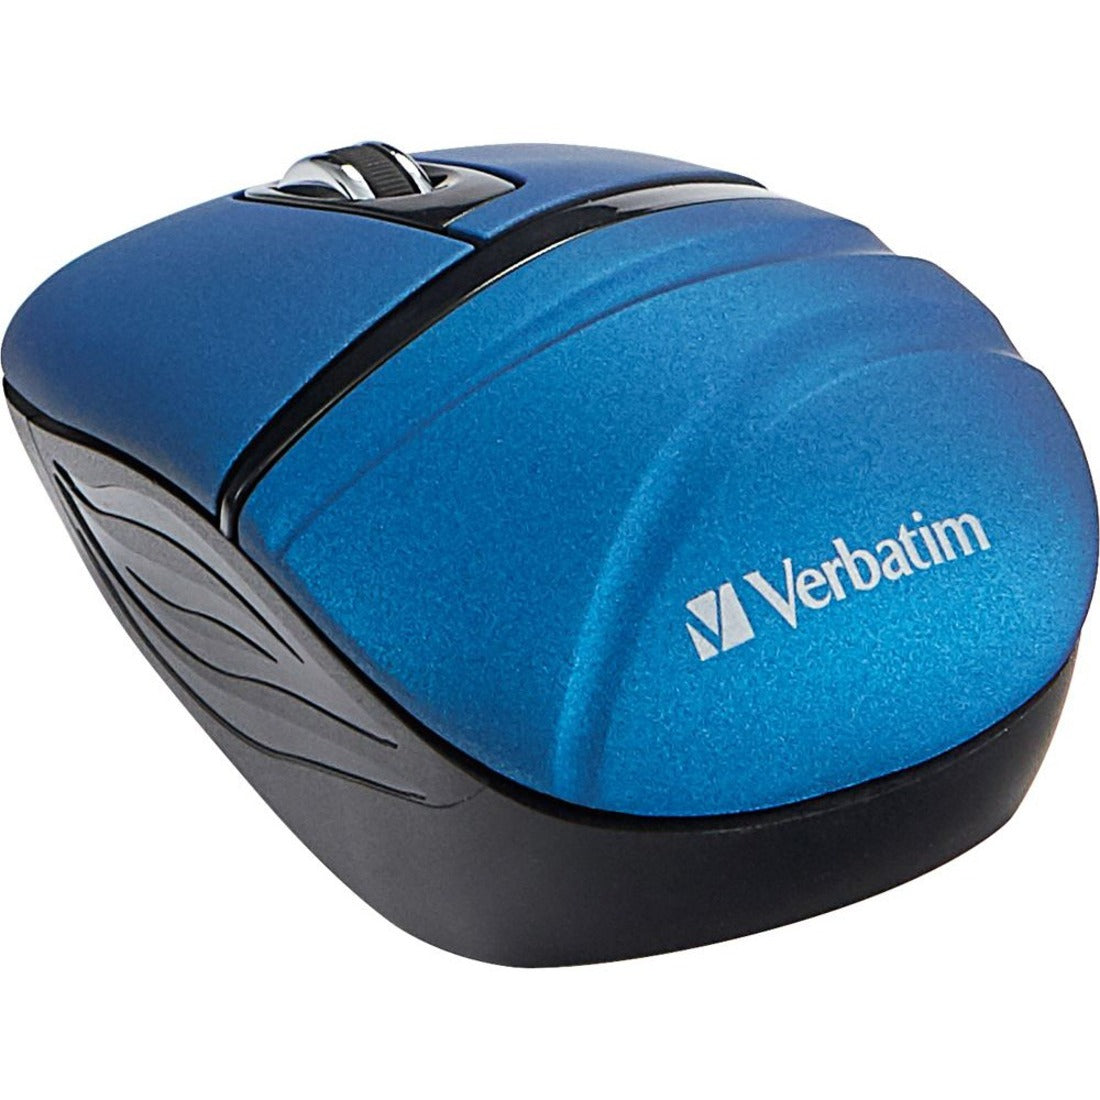 Verbatim 70705 Wireless Mini Travel Mouse, Commuter Series - Blue, 1000 DPI, 2.4 GHz Wireless Technology